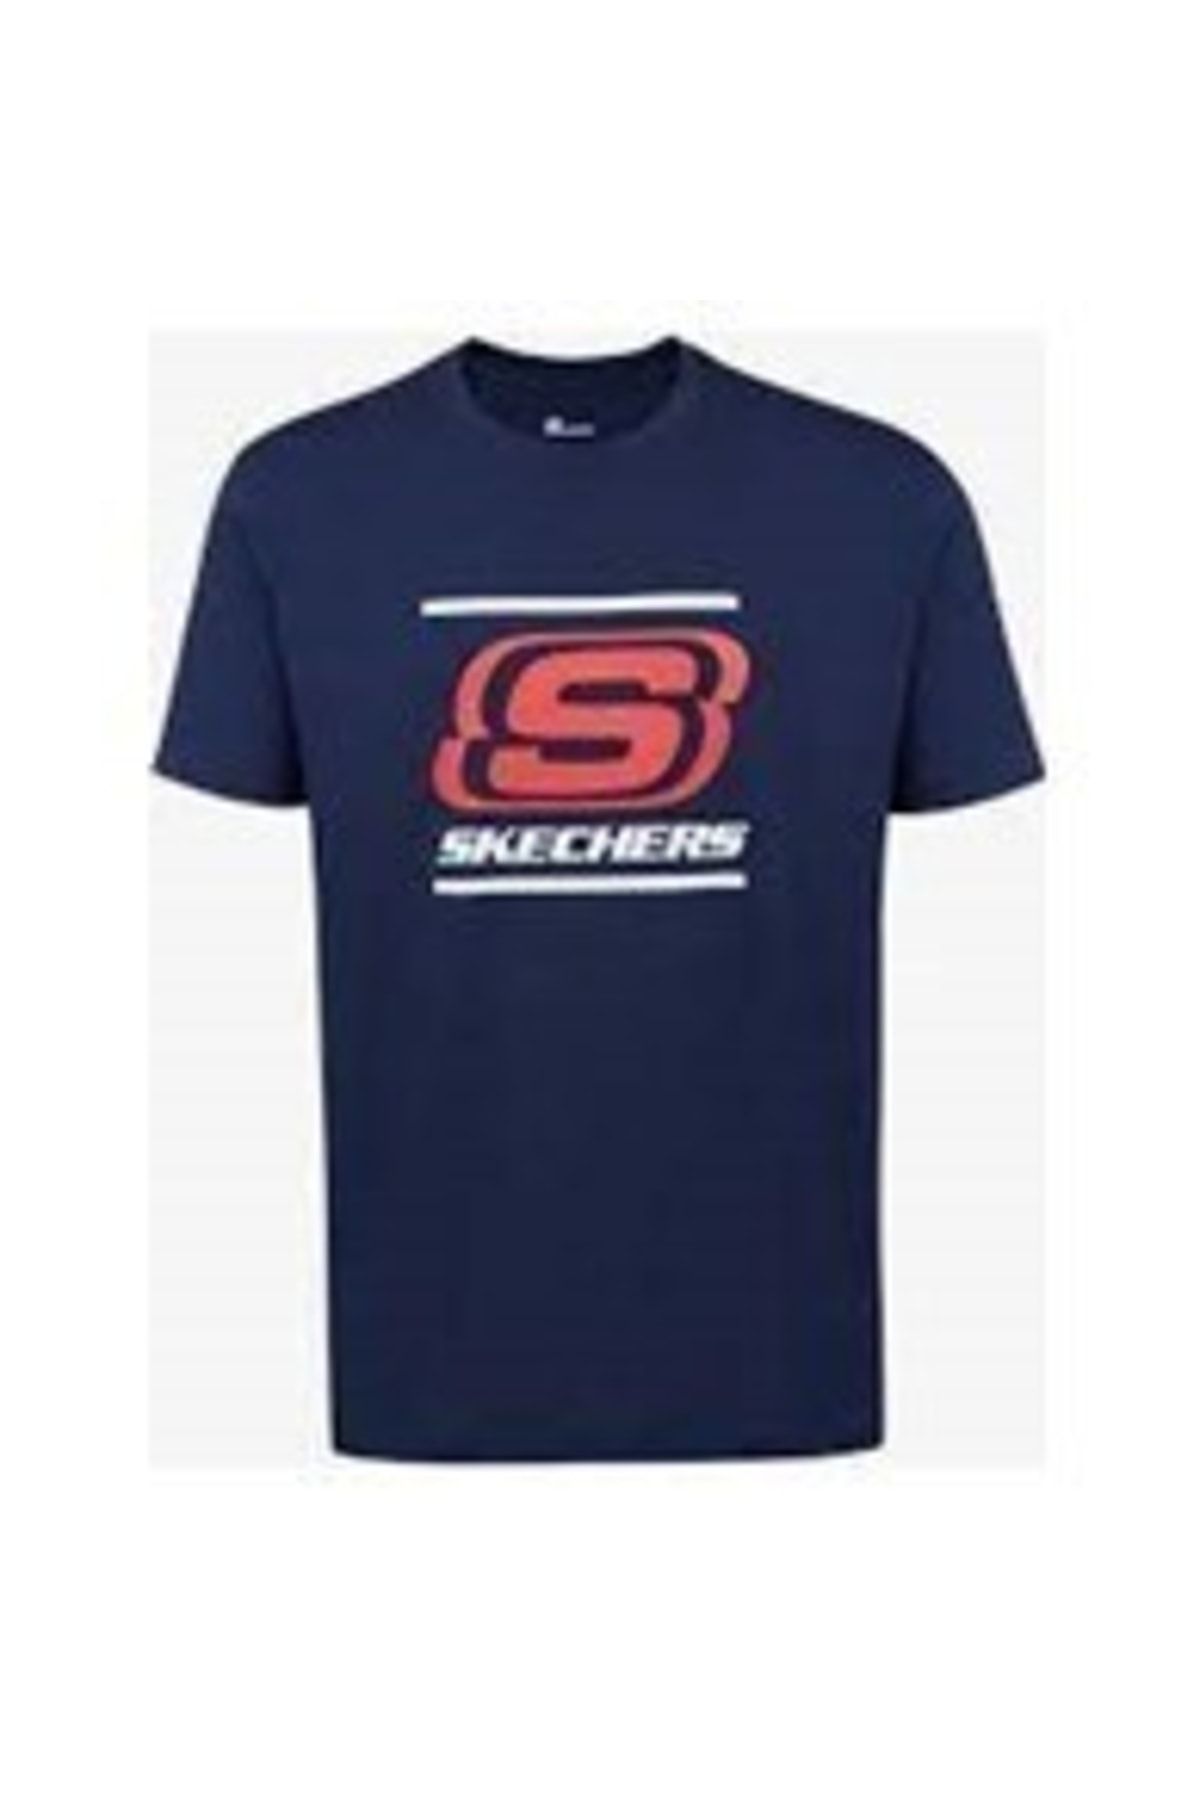 Skechers Logo png download - 1600*323 - Free Transparent Skechers png  Download. - CleanPNG / KissPNG